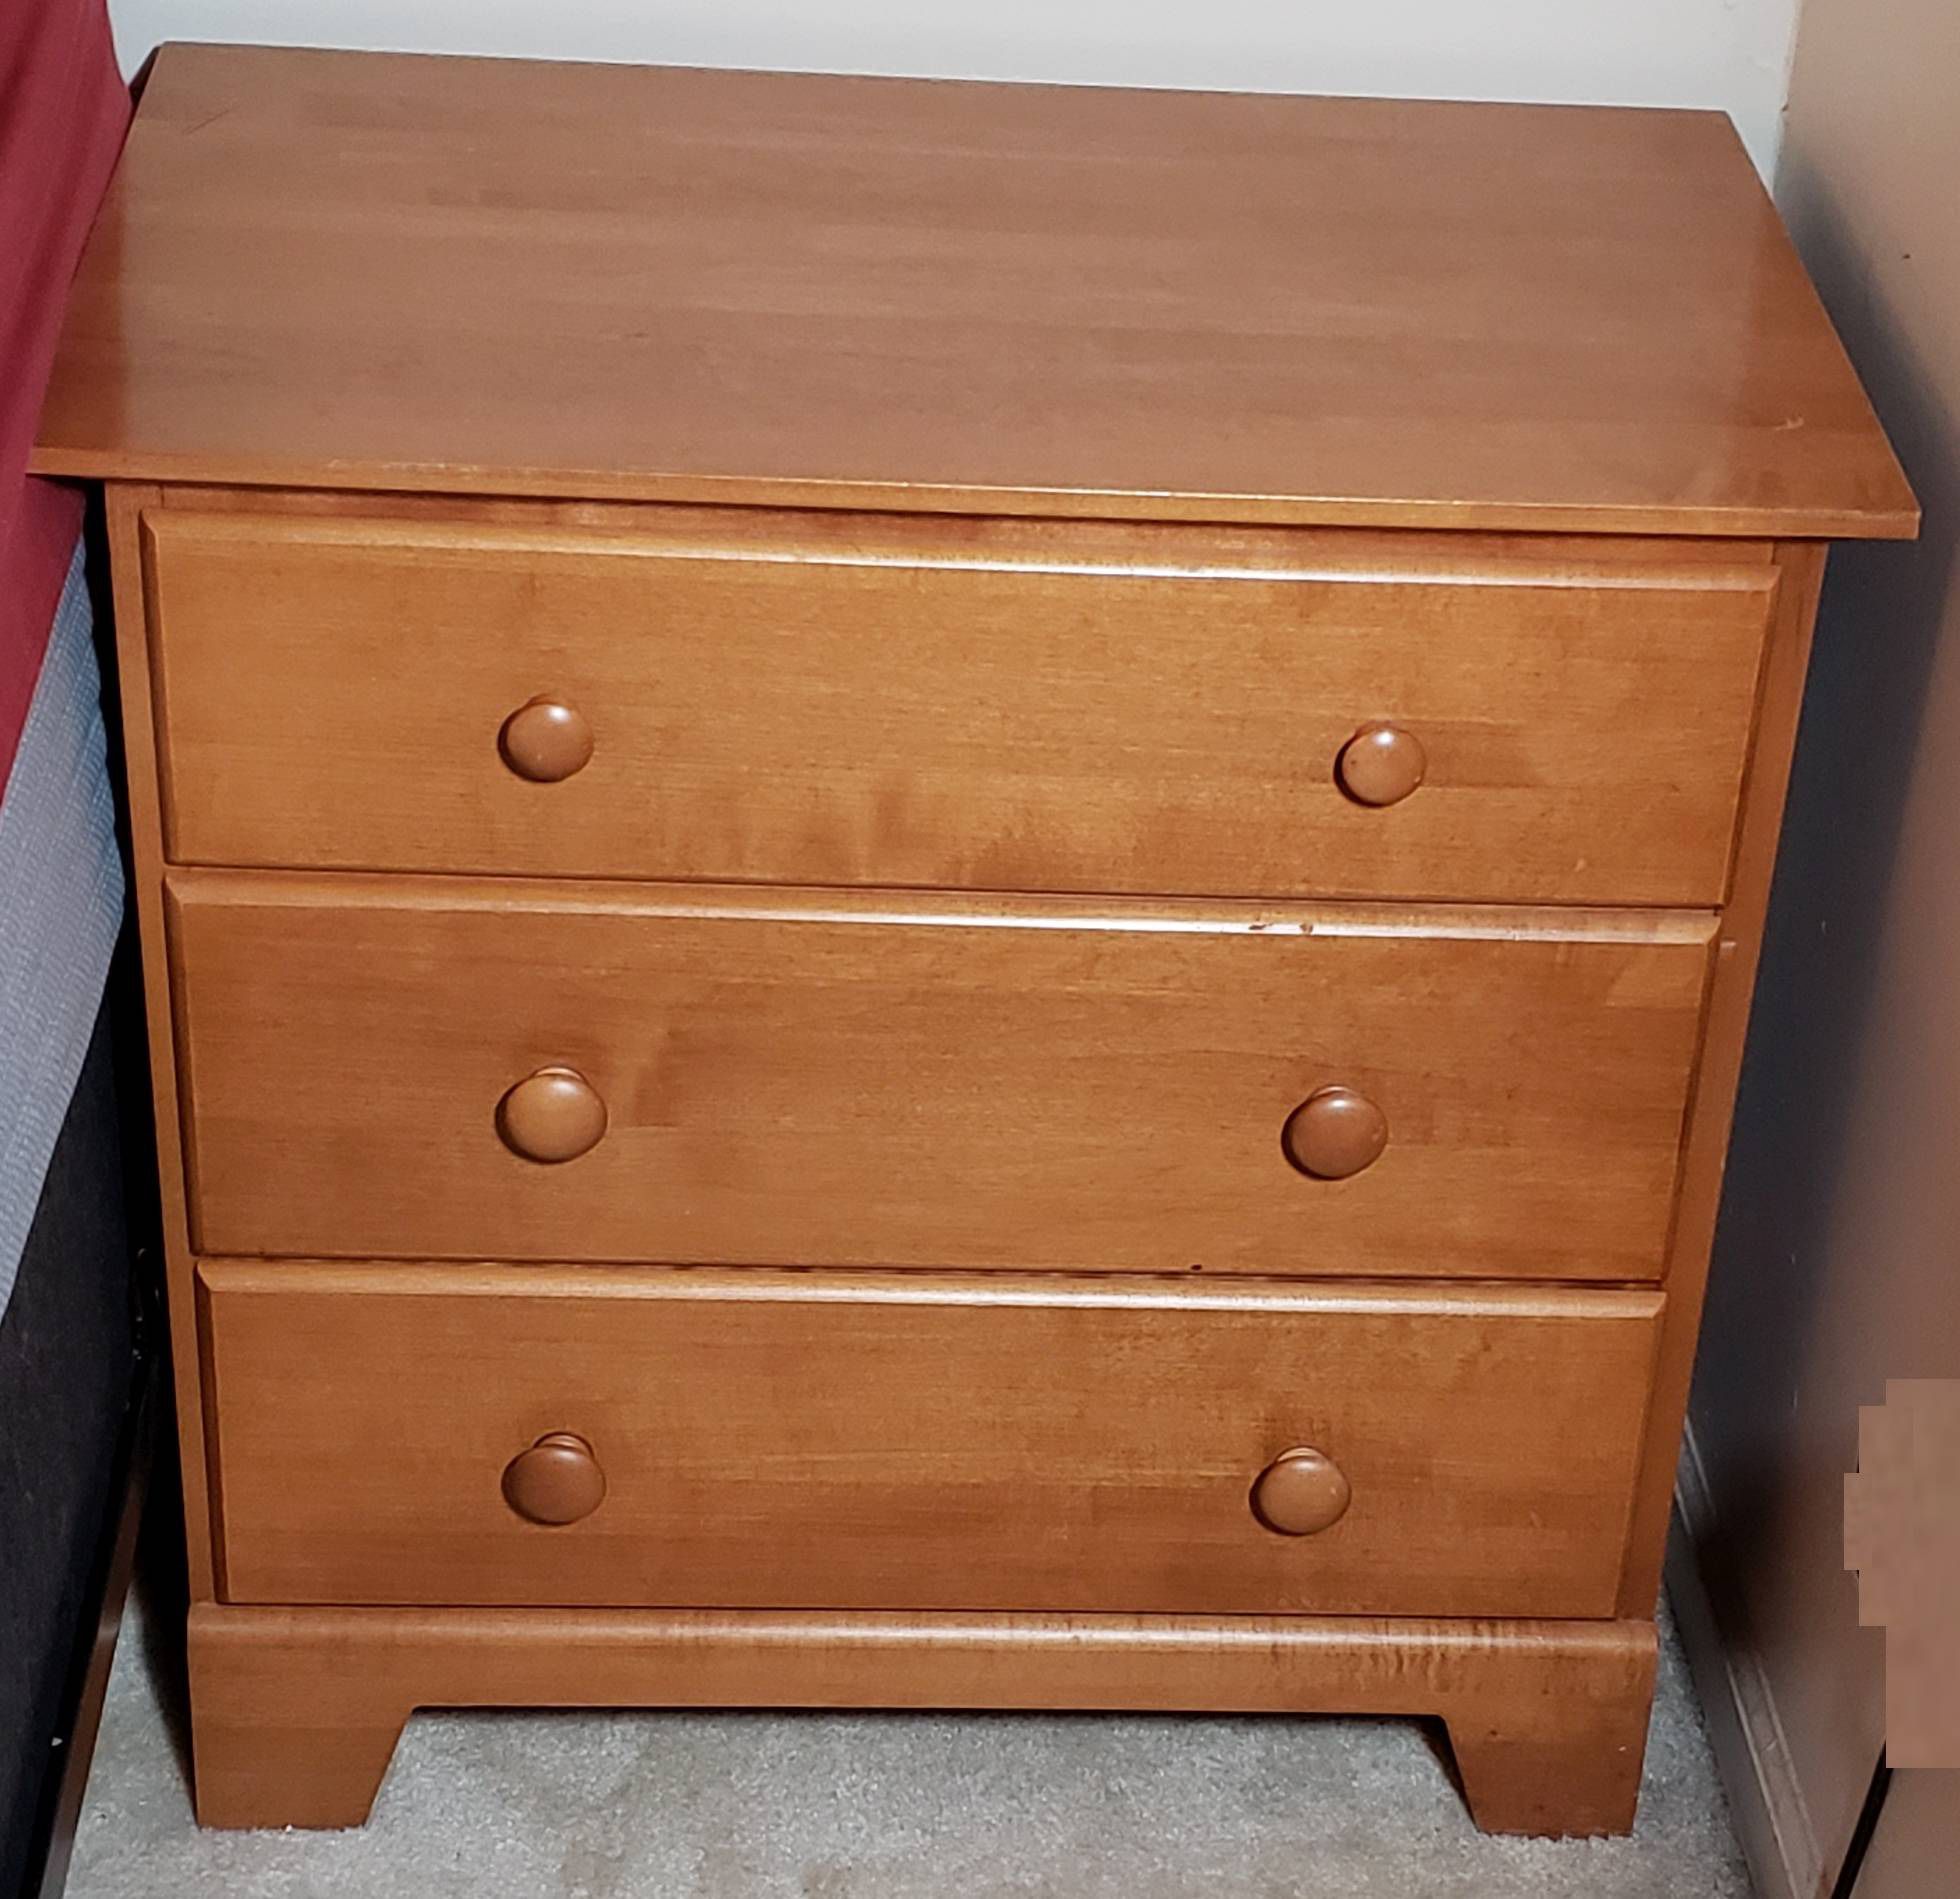 Small Wood Dresser